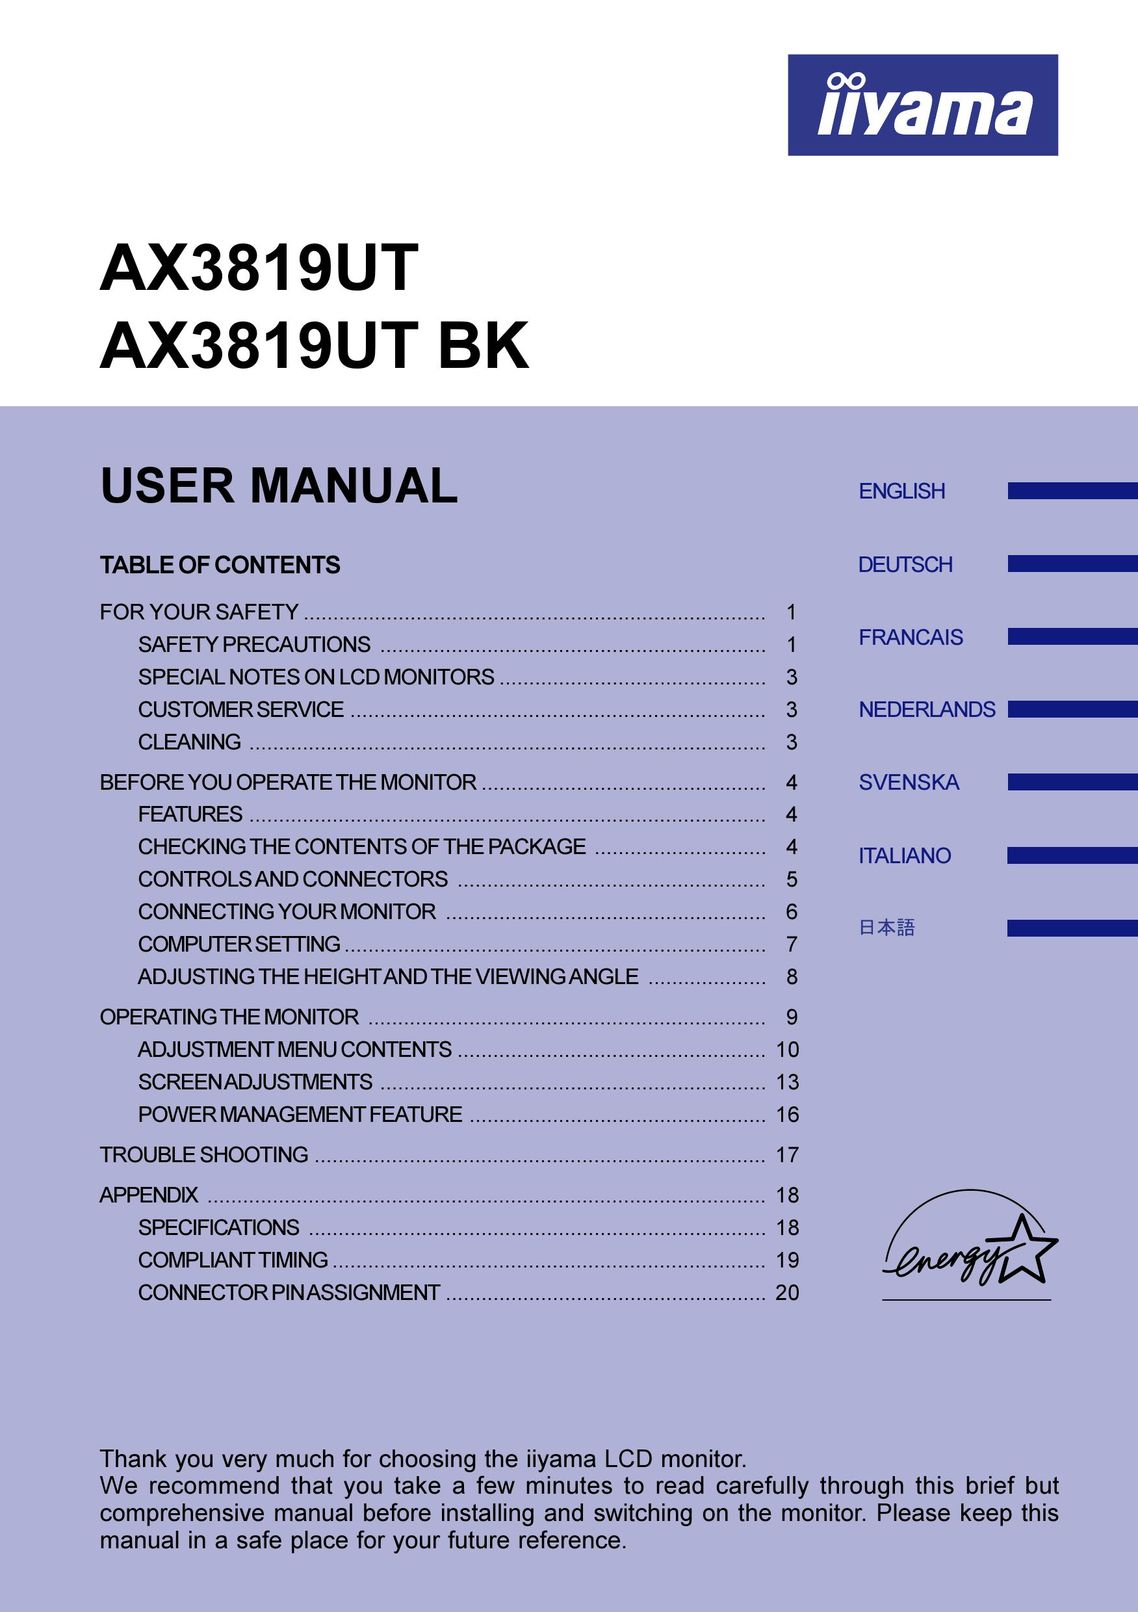 Iiyama AX3819UT BK Computer Monitor User Manual